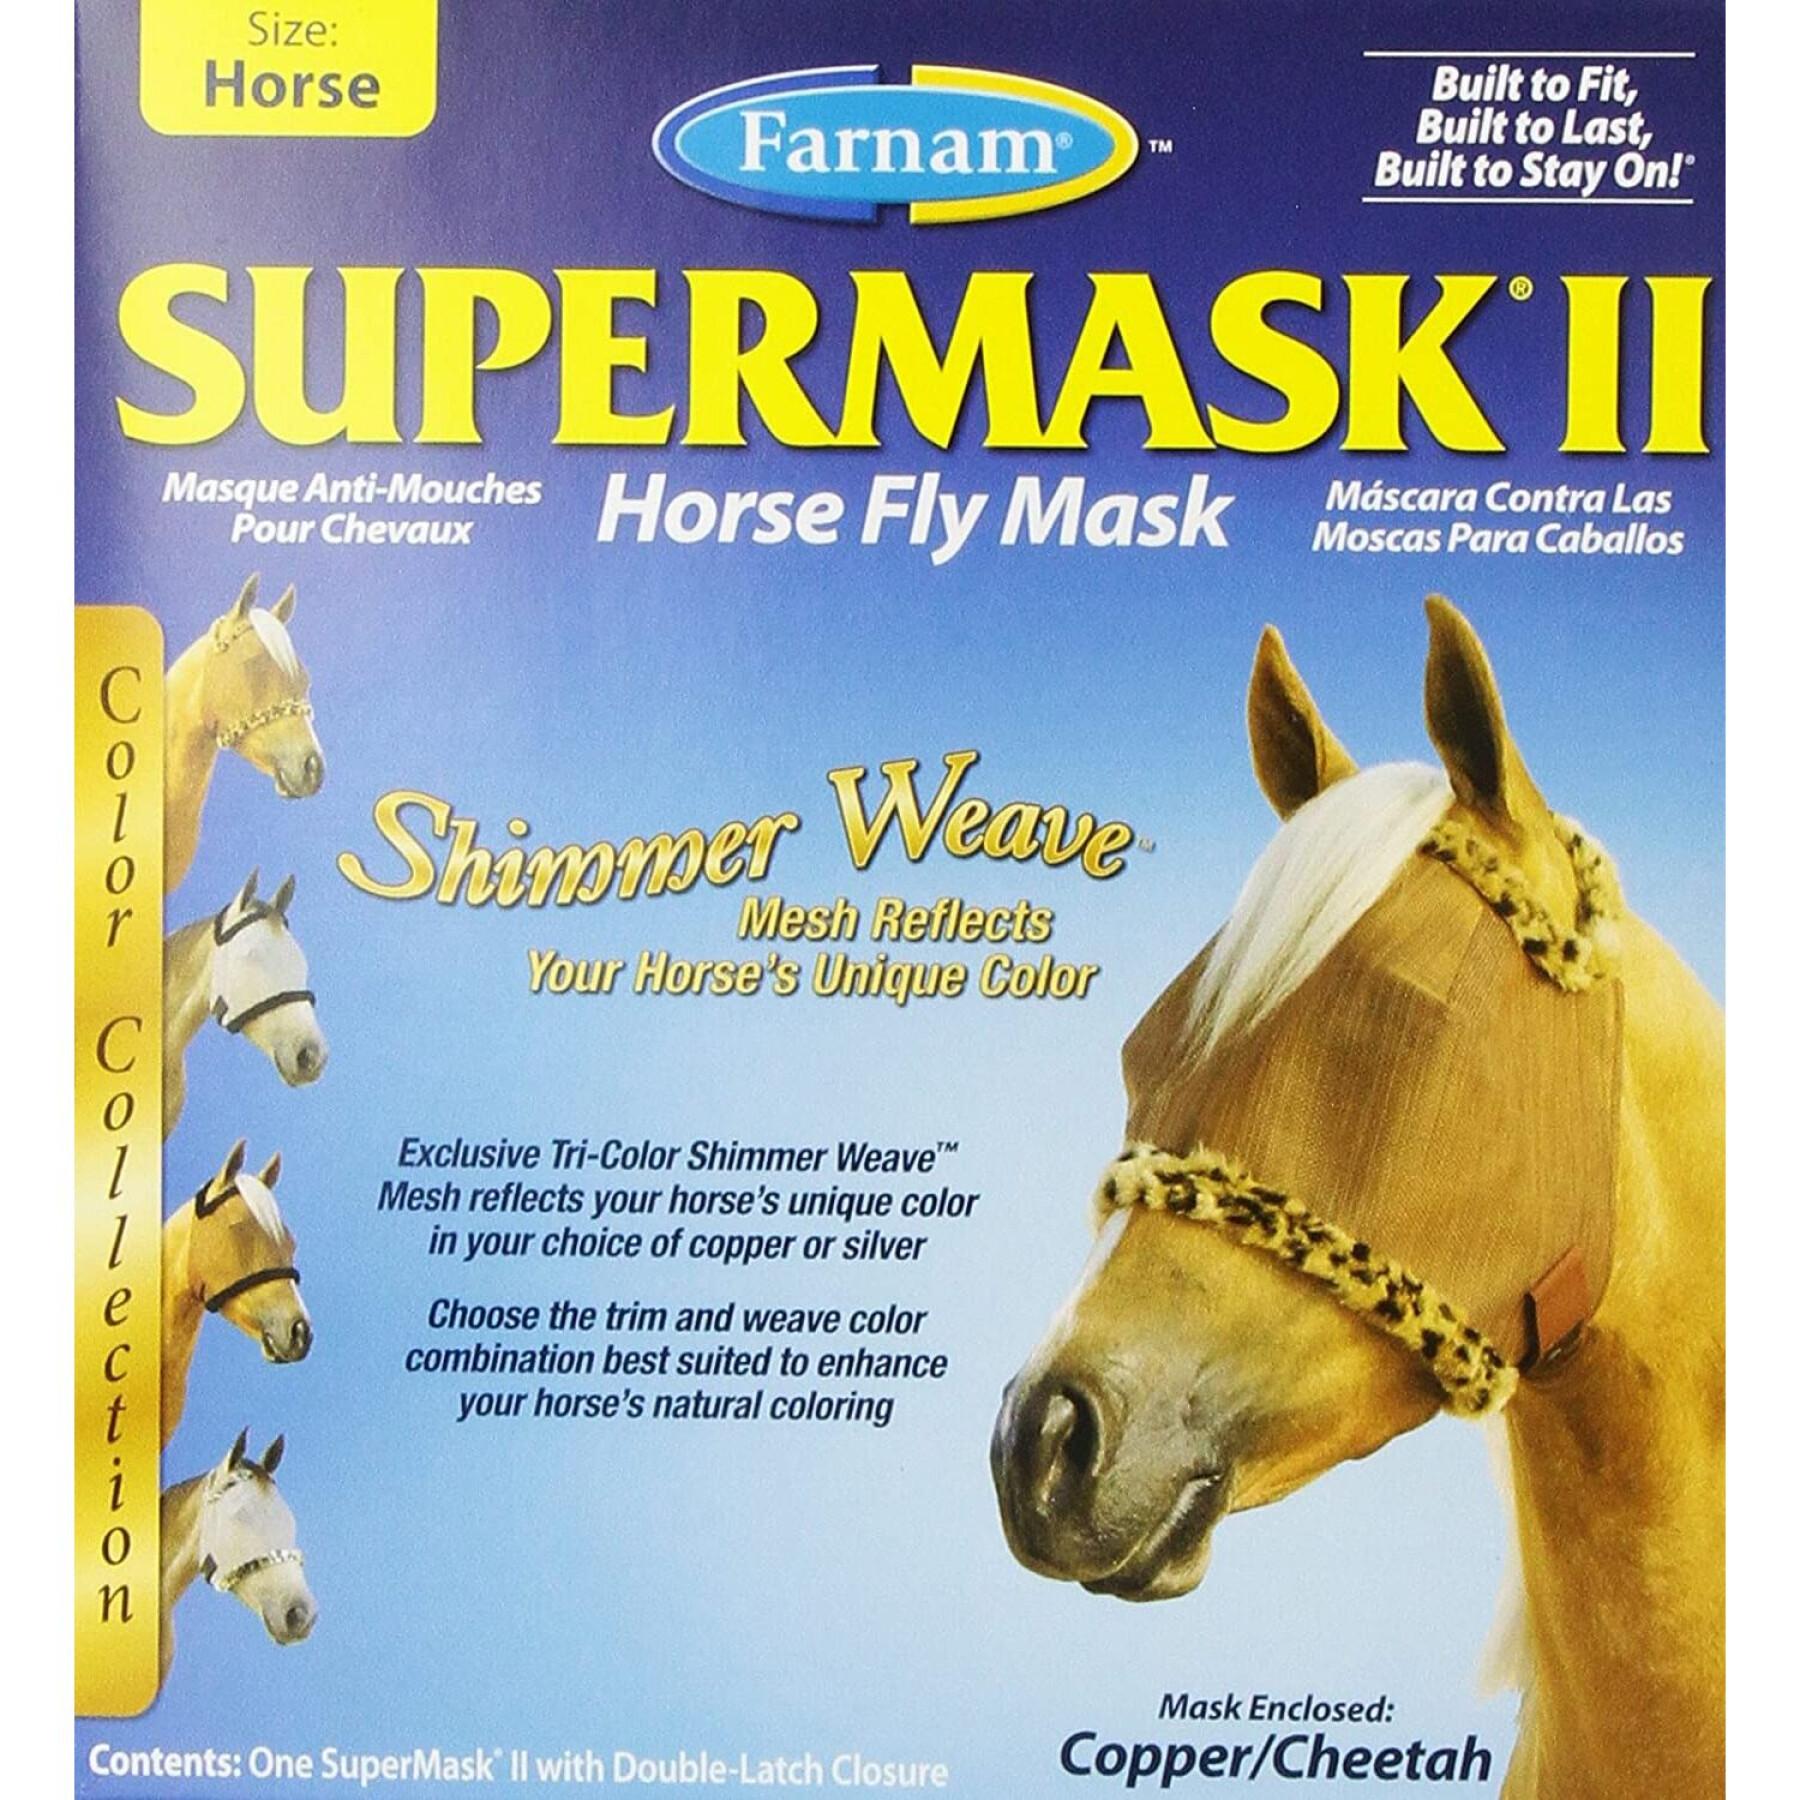 Masque anti-mouches pour cheval Farnam Supermask II Arab arab